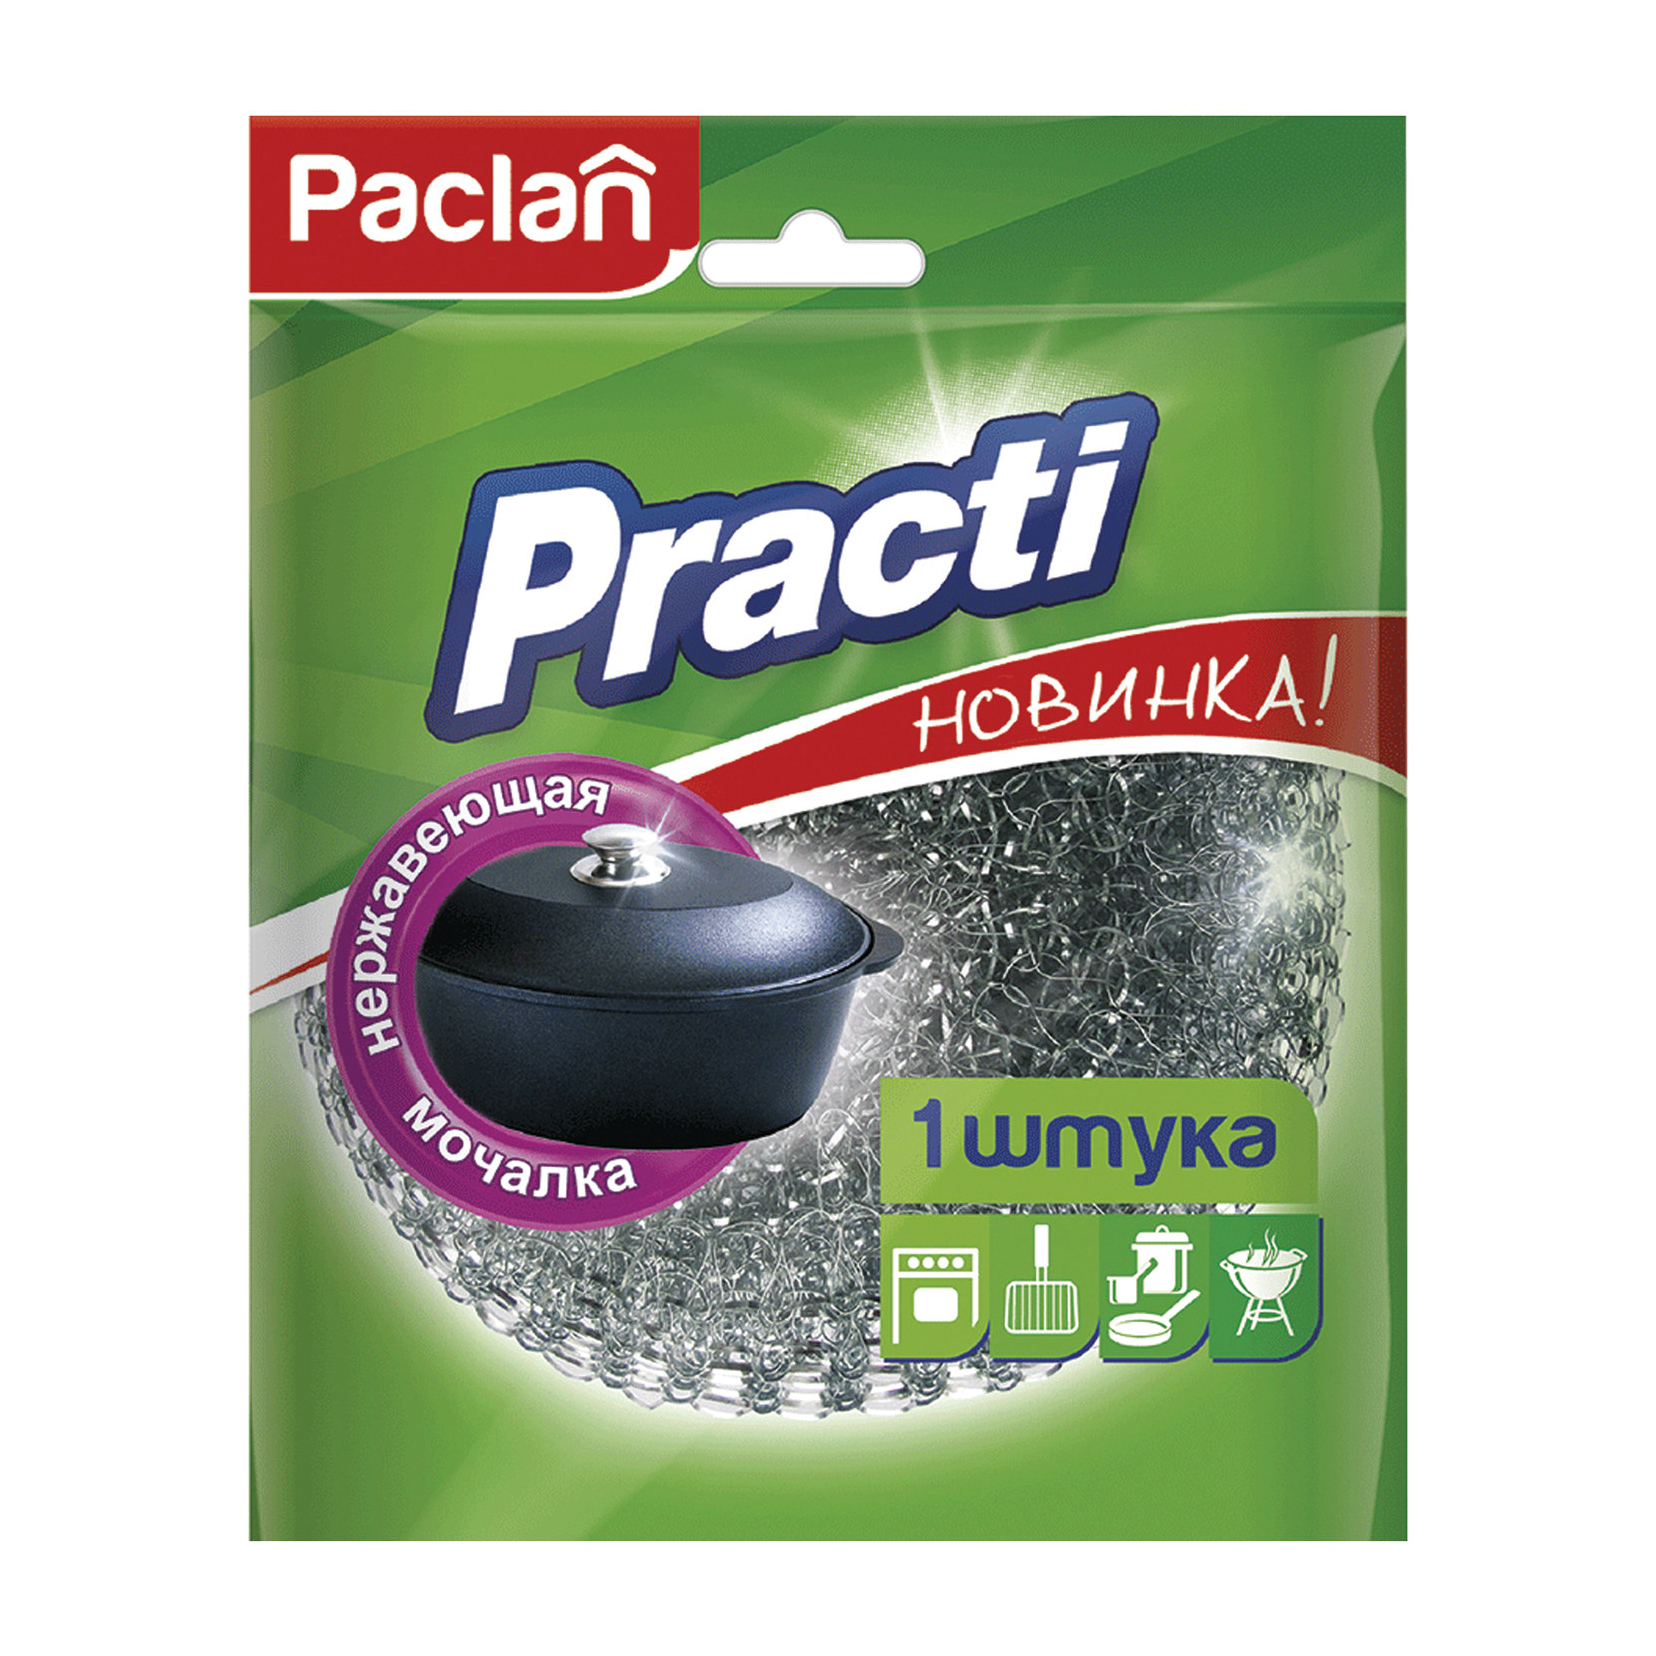 Мочалка для посуды металическая Paclan Practi 1 шт мочалка для посуды металическая paclan practi 1 шт